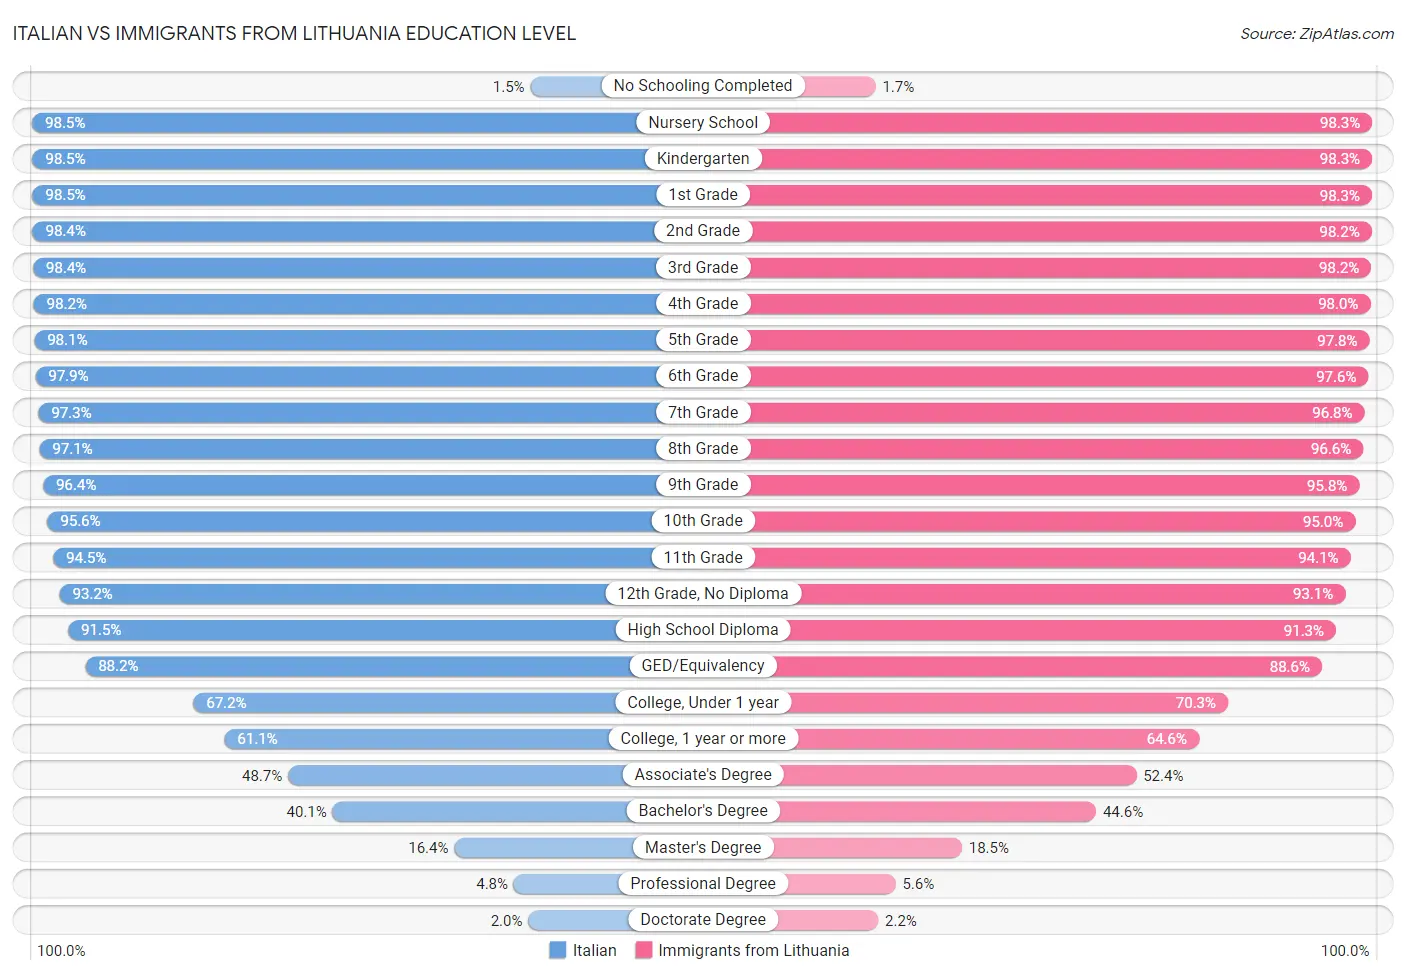 Italian vs Immigrants from Lithuania Education Level